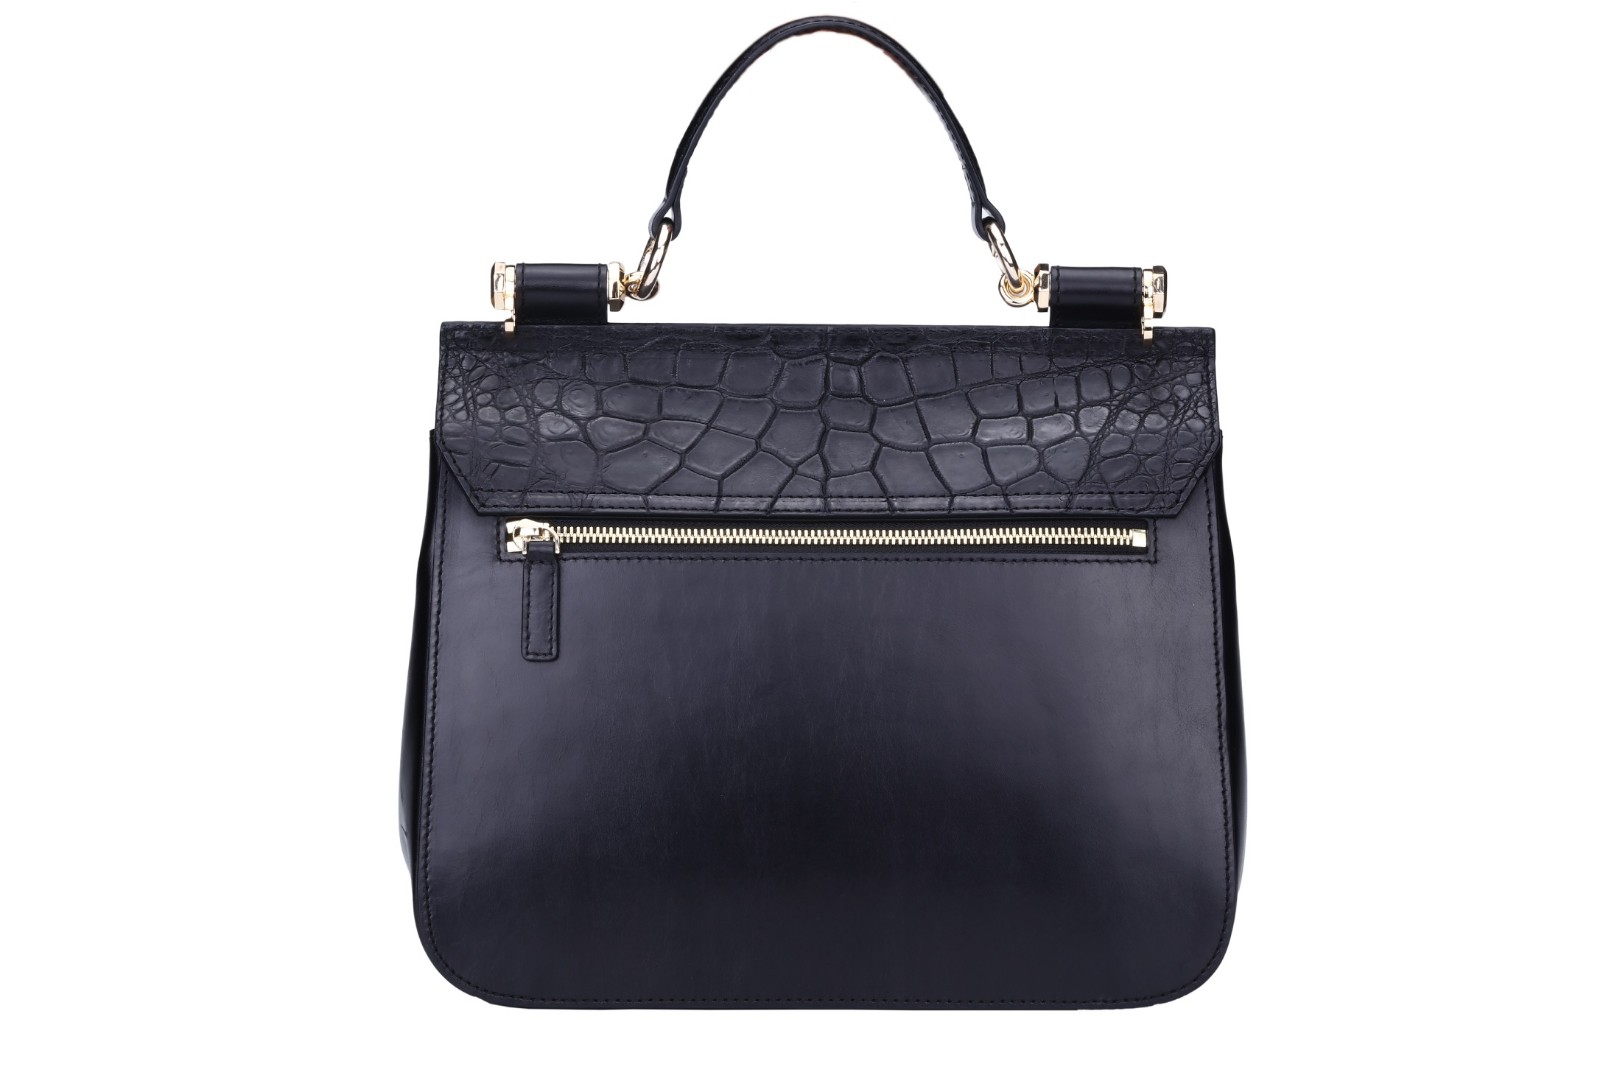 GF bags-Professional Ladies Bag Affordable Handbags From Gaofeng Bags-5